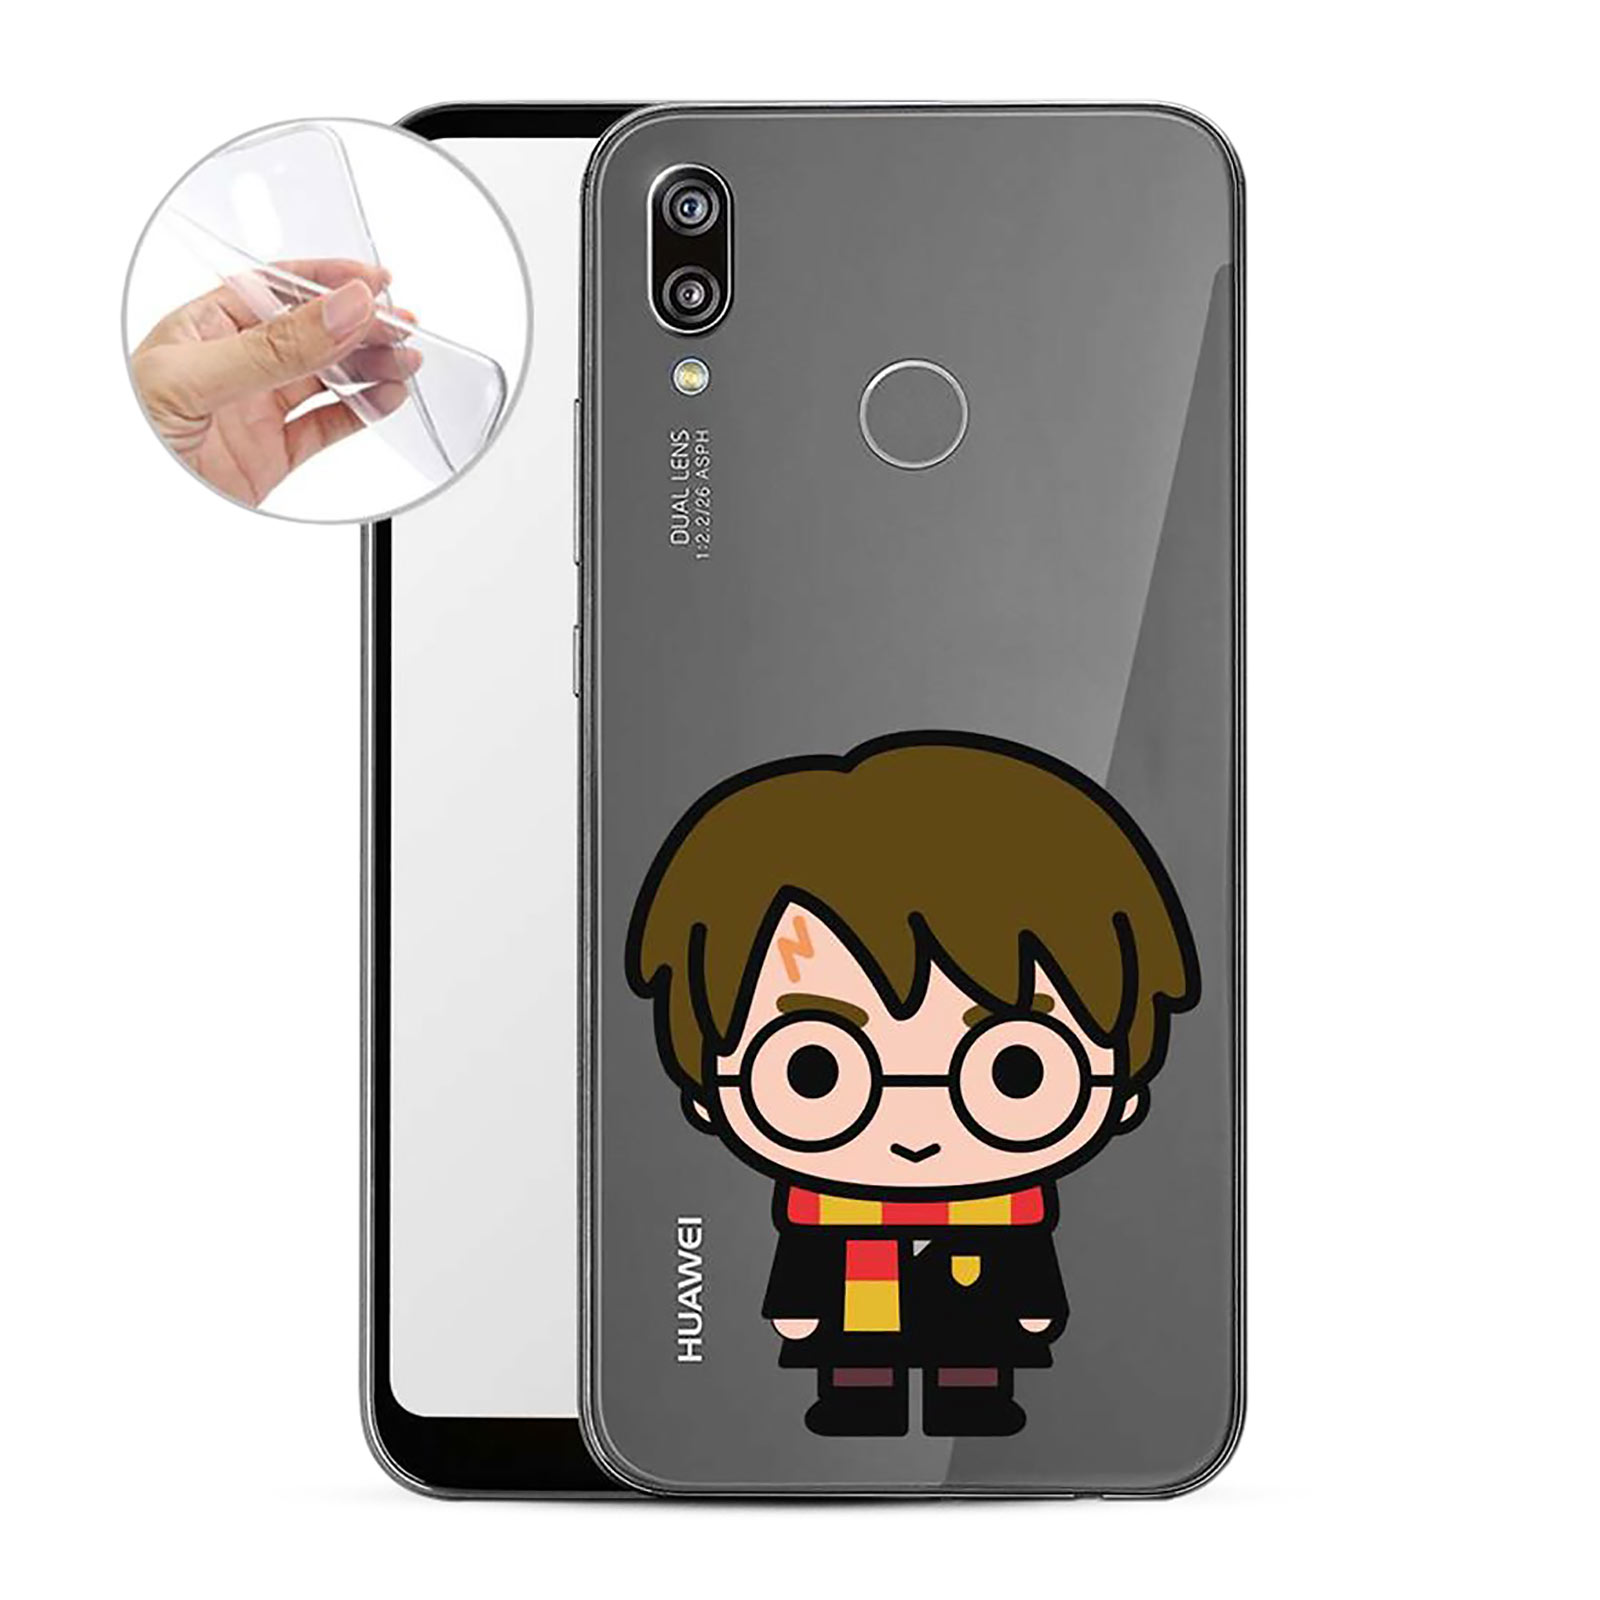 Harry Potter - Coque Huawei P20 Lite Chibi en silicone transparent